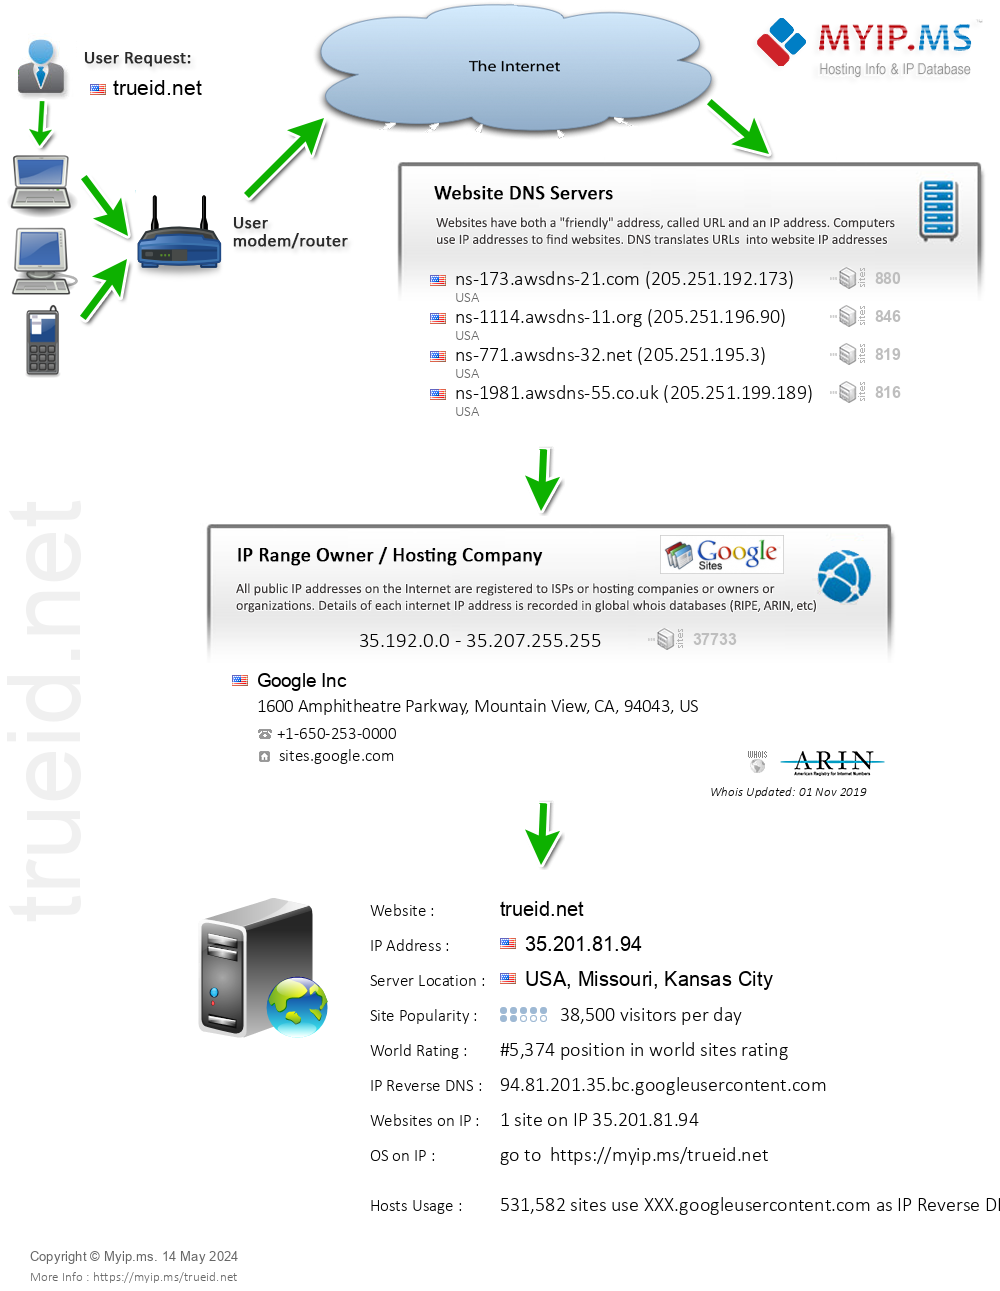 Trueid.net - Website Hosting Visual IP Diagram